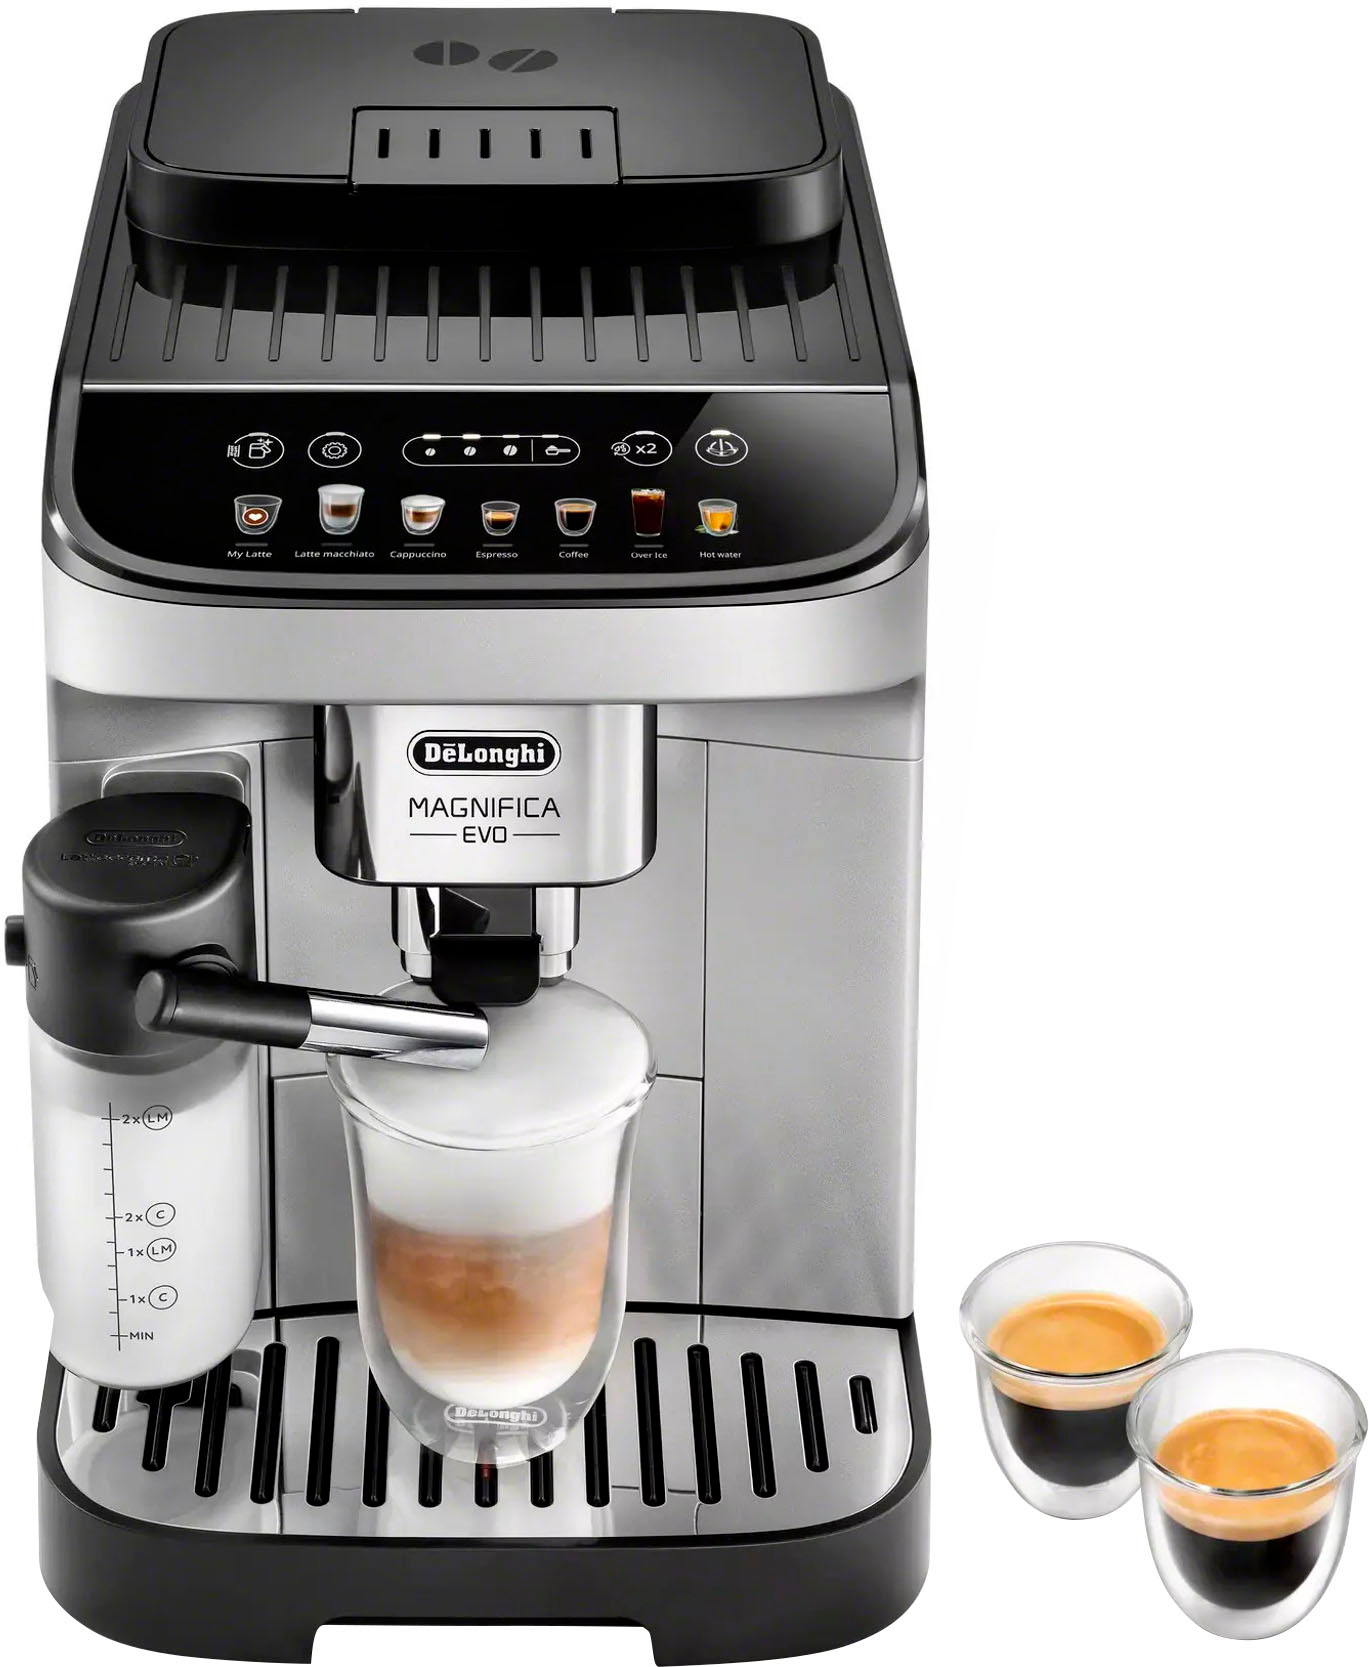 De'Longhi Magnifica Evo Coffee and Espresso Machine Silver ECAM29084SB - Best Buy $599